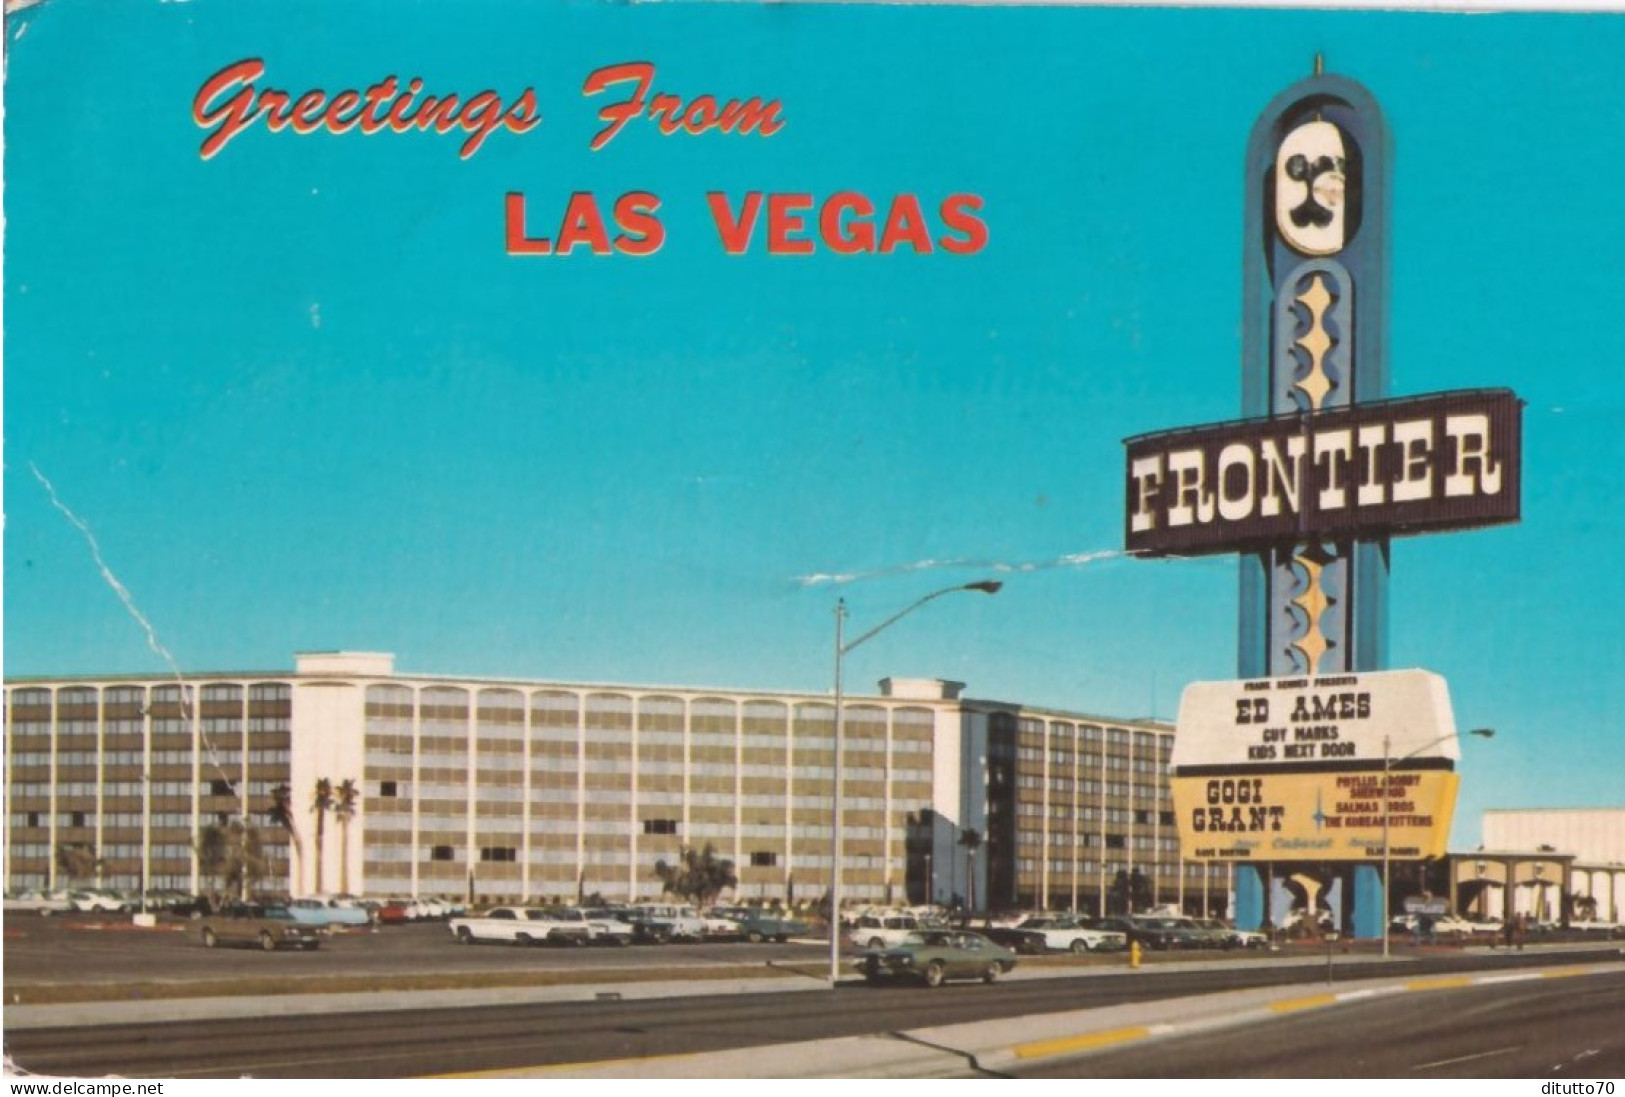 Greetings From - Las Vegas - Nevada - Frontier Hotel - Formato Piccolo Viaggiata – FE390 - Las Vegas